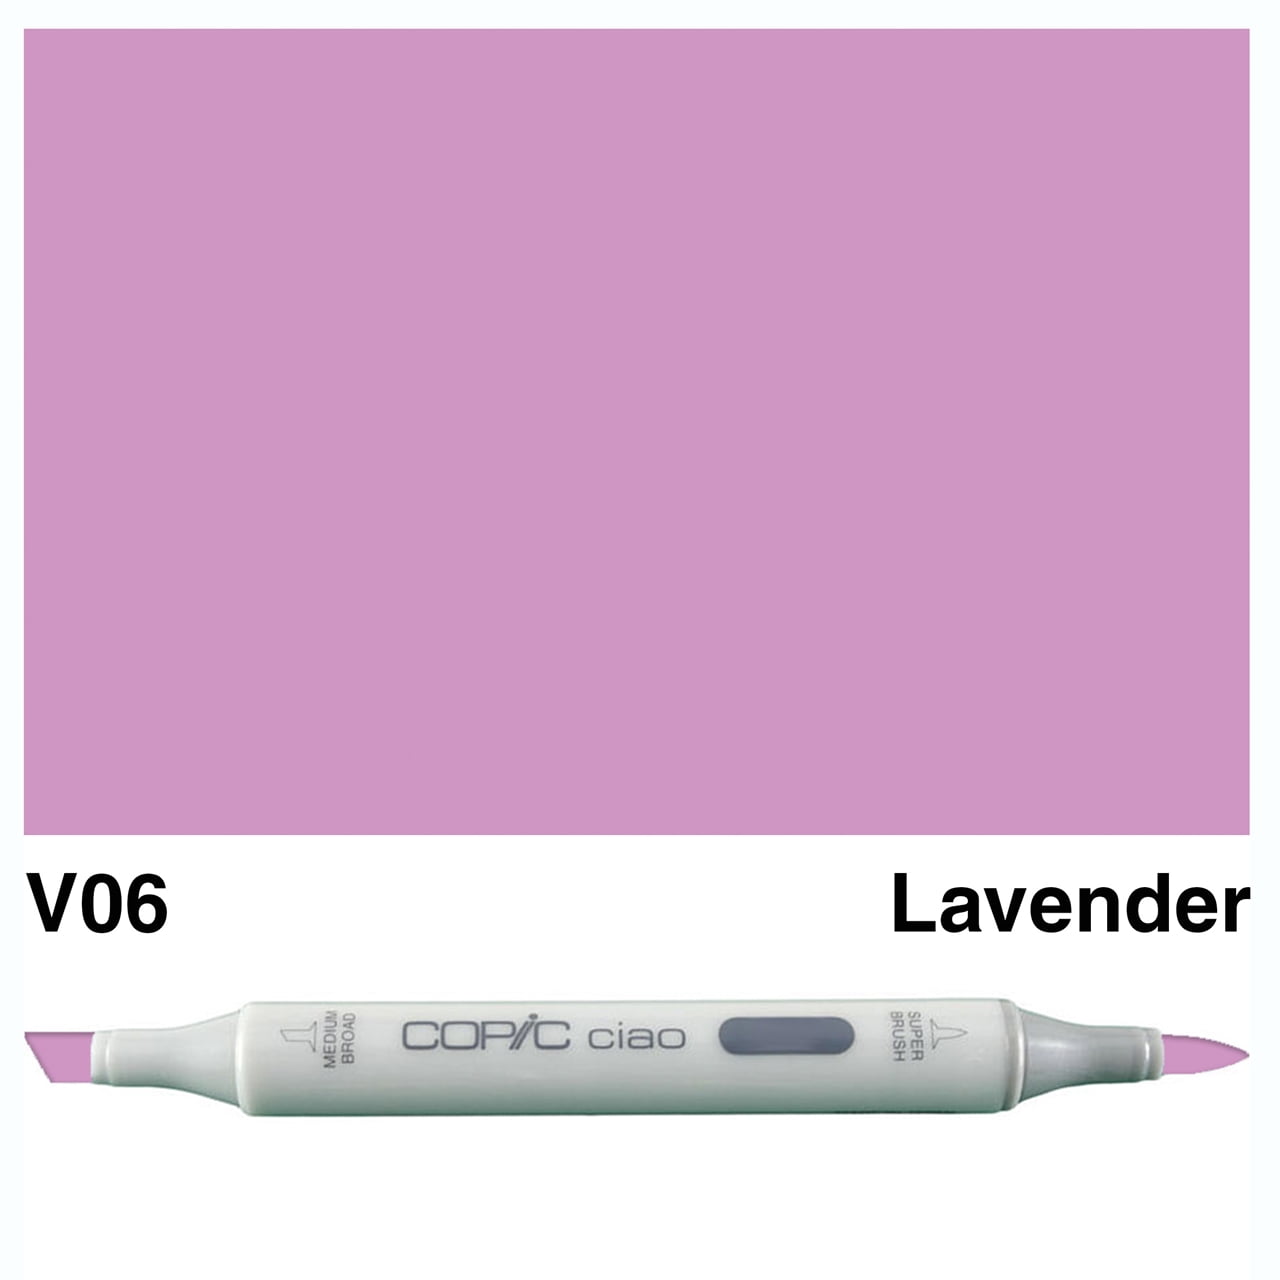 Ciao　Lavender　V06　Copic　PanChroma